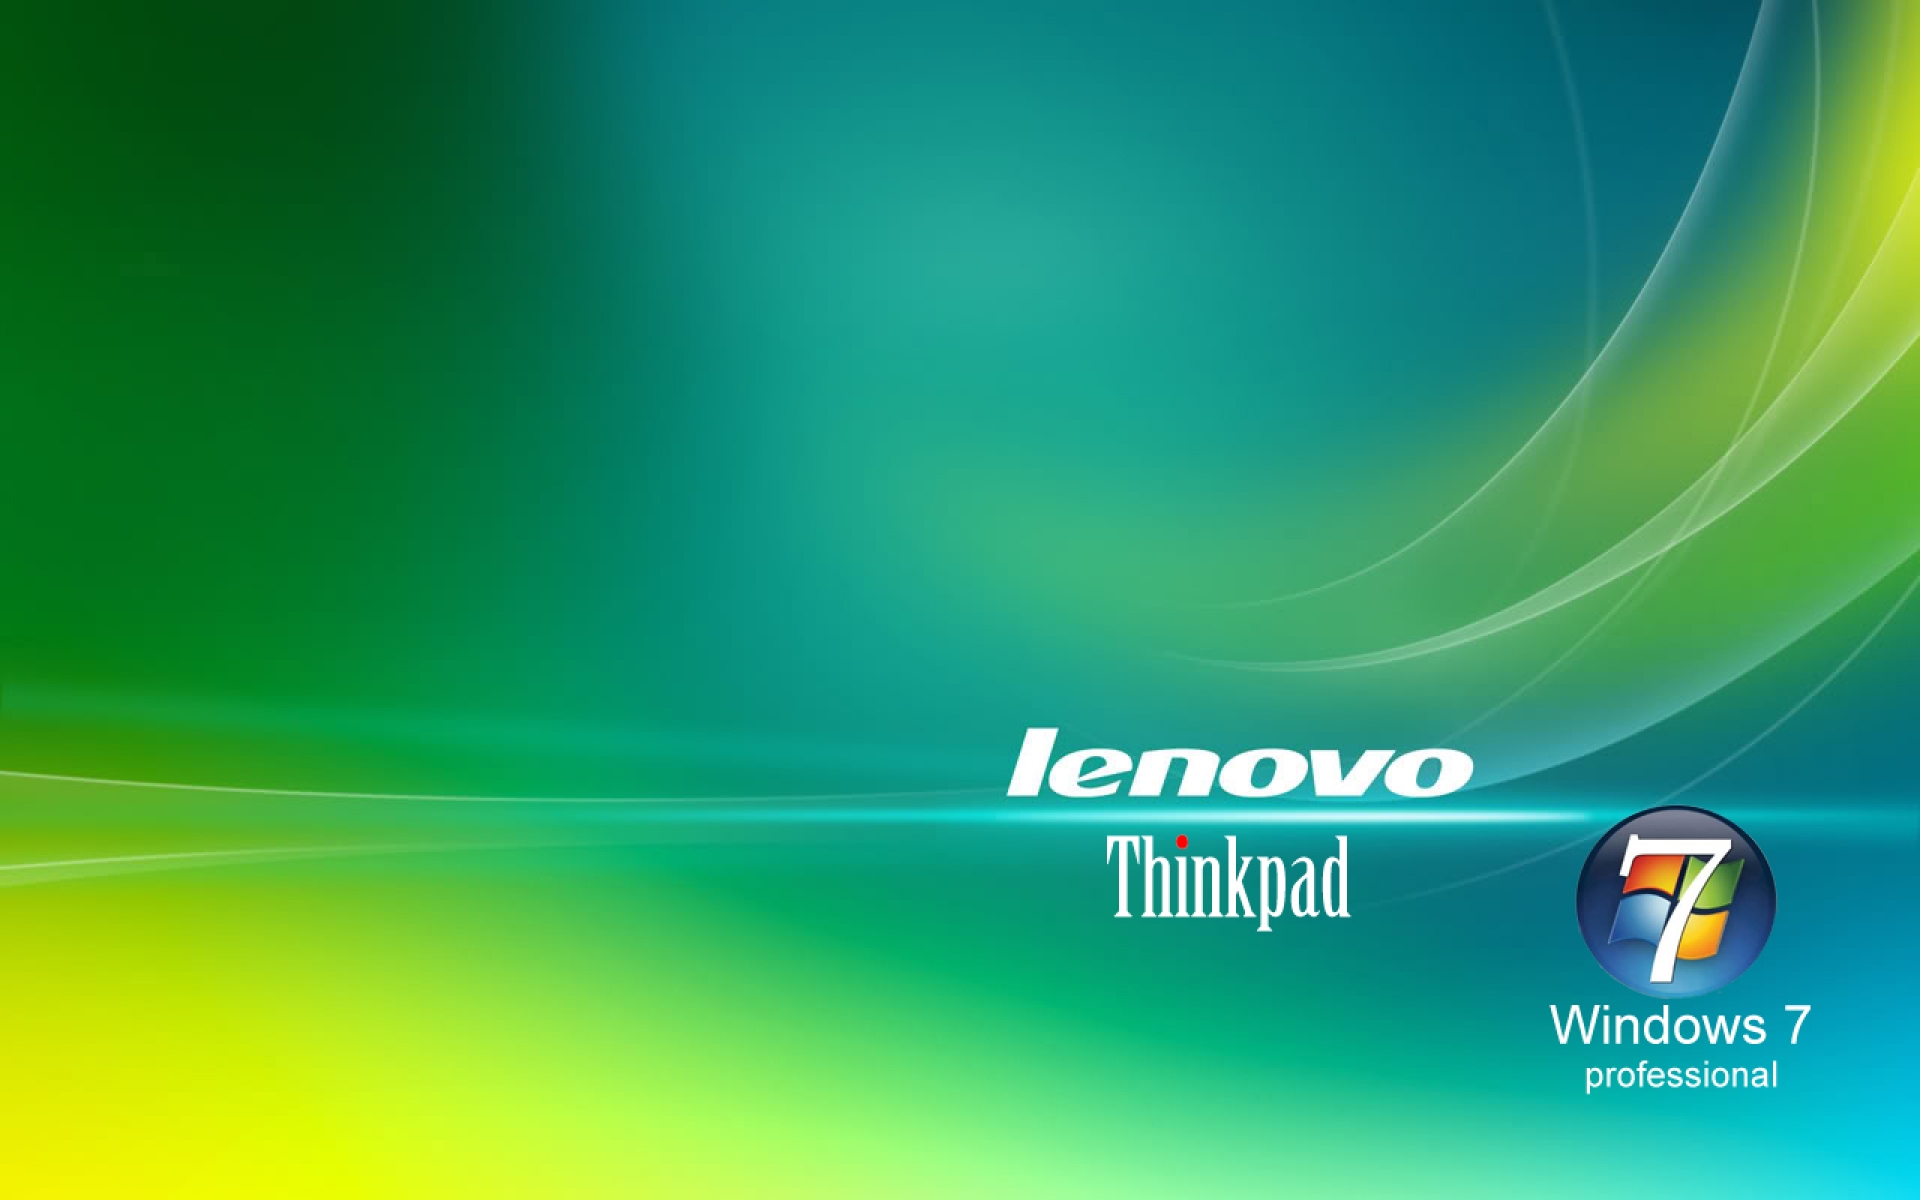 Ibm Lenovo Thinkpad Jpg